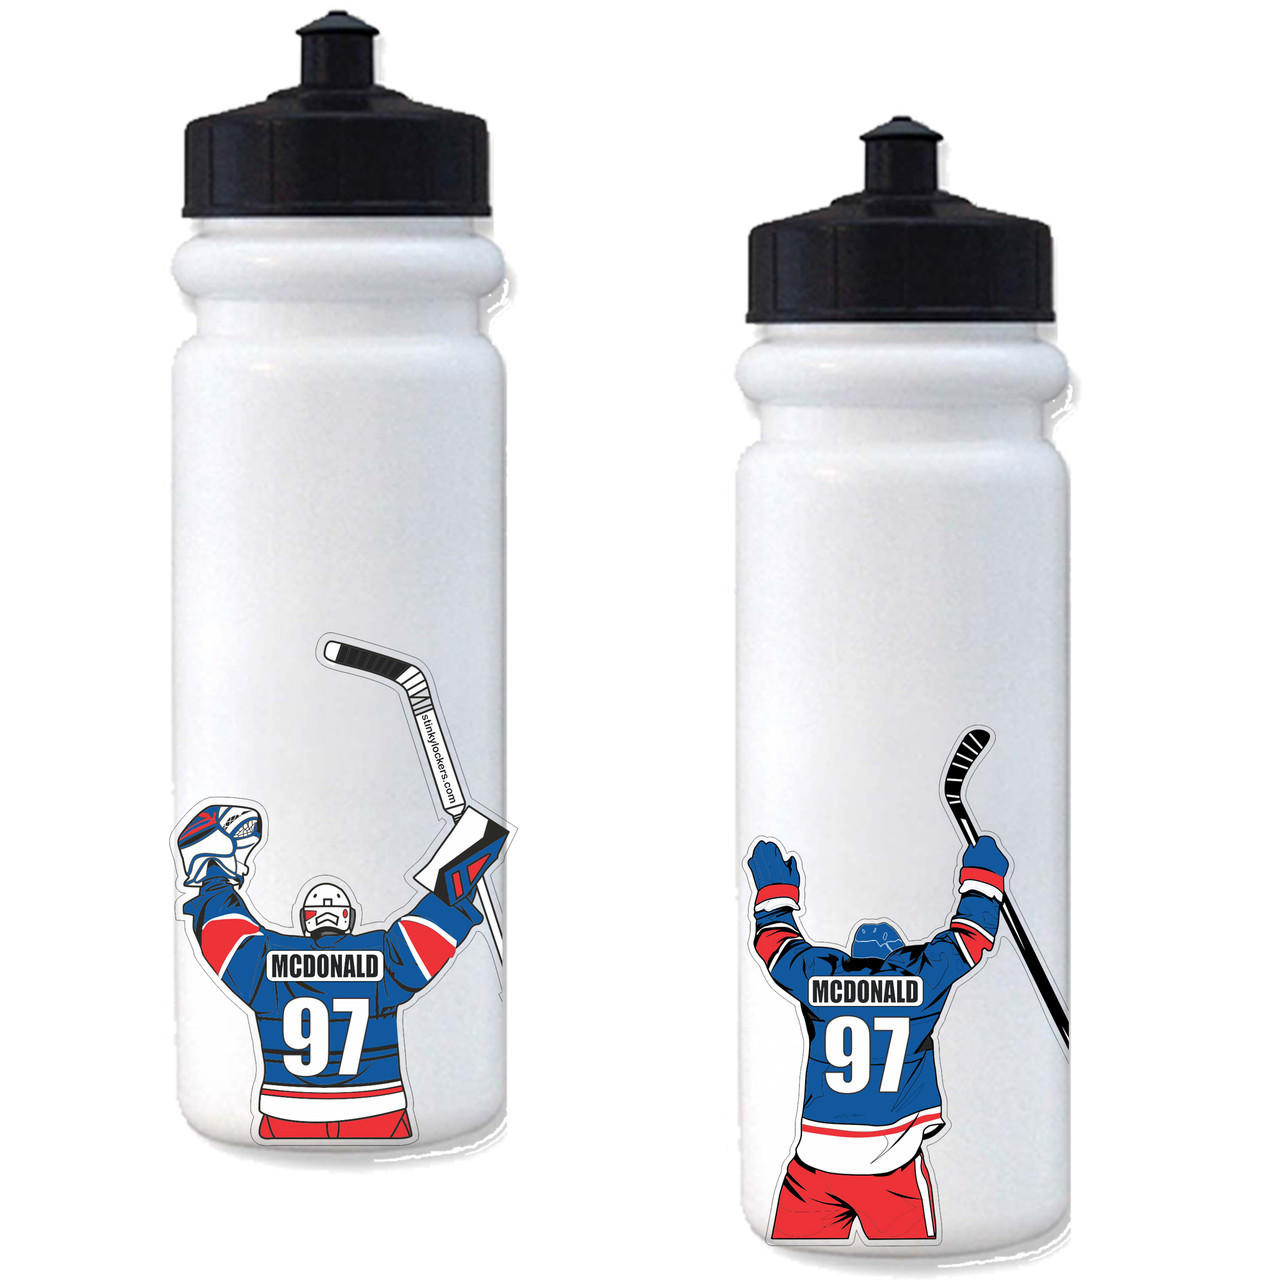 Stinky Lockers 3 Pack Personalized Hockey Water Bottle Stickers